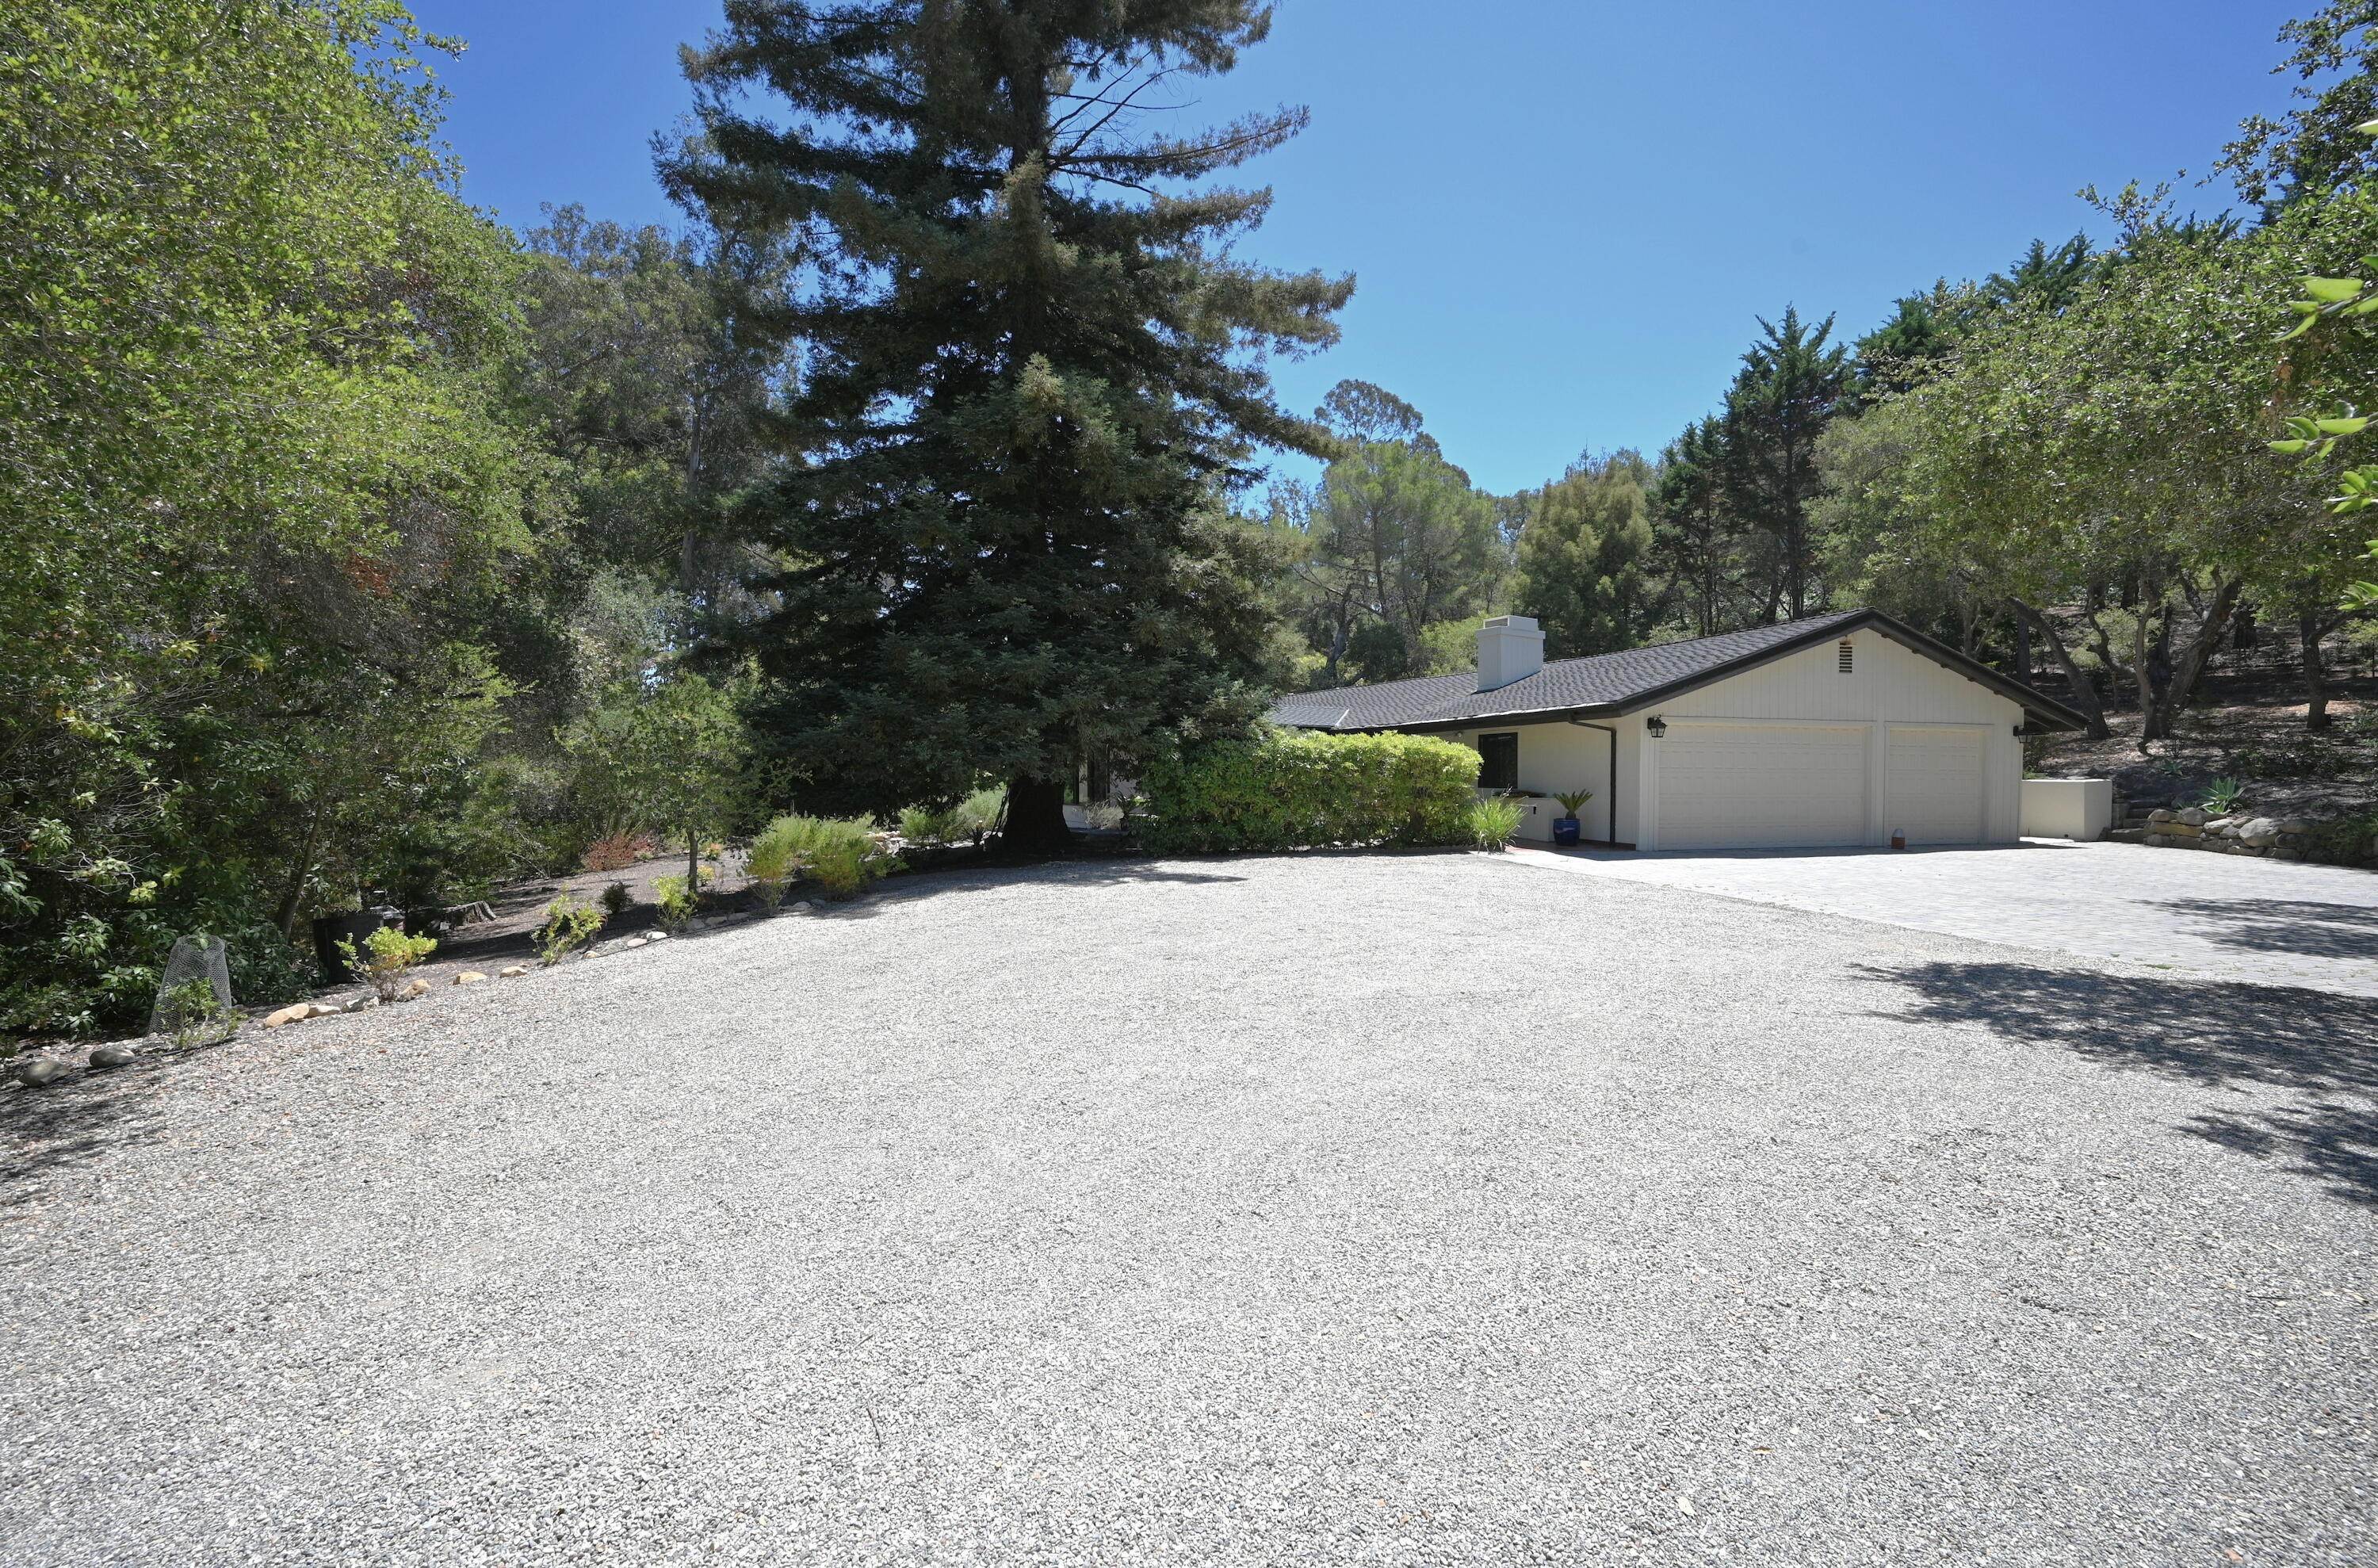 1. Estate at 1097 Camino Viejo Road Montecito, California 93108 United States